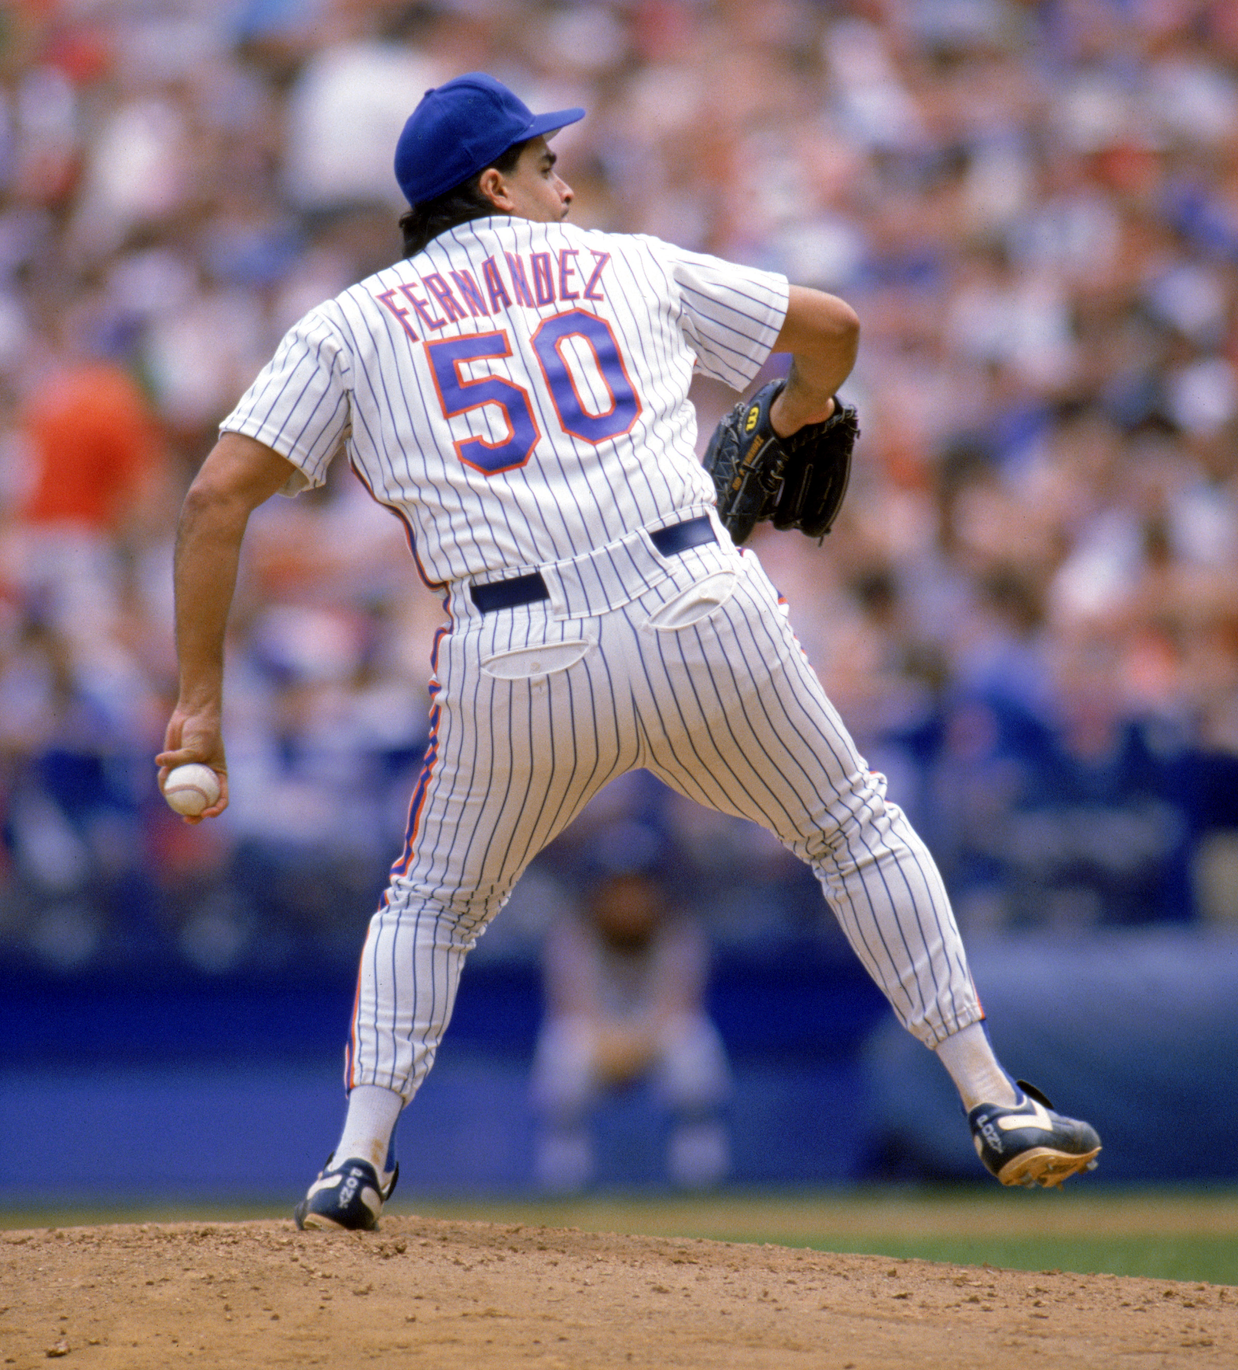 October 5, 1986: Mets cap 108-win regular season as Ron Darling, Sid  Fernandez combine for shutout – Society for American Baseball Research